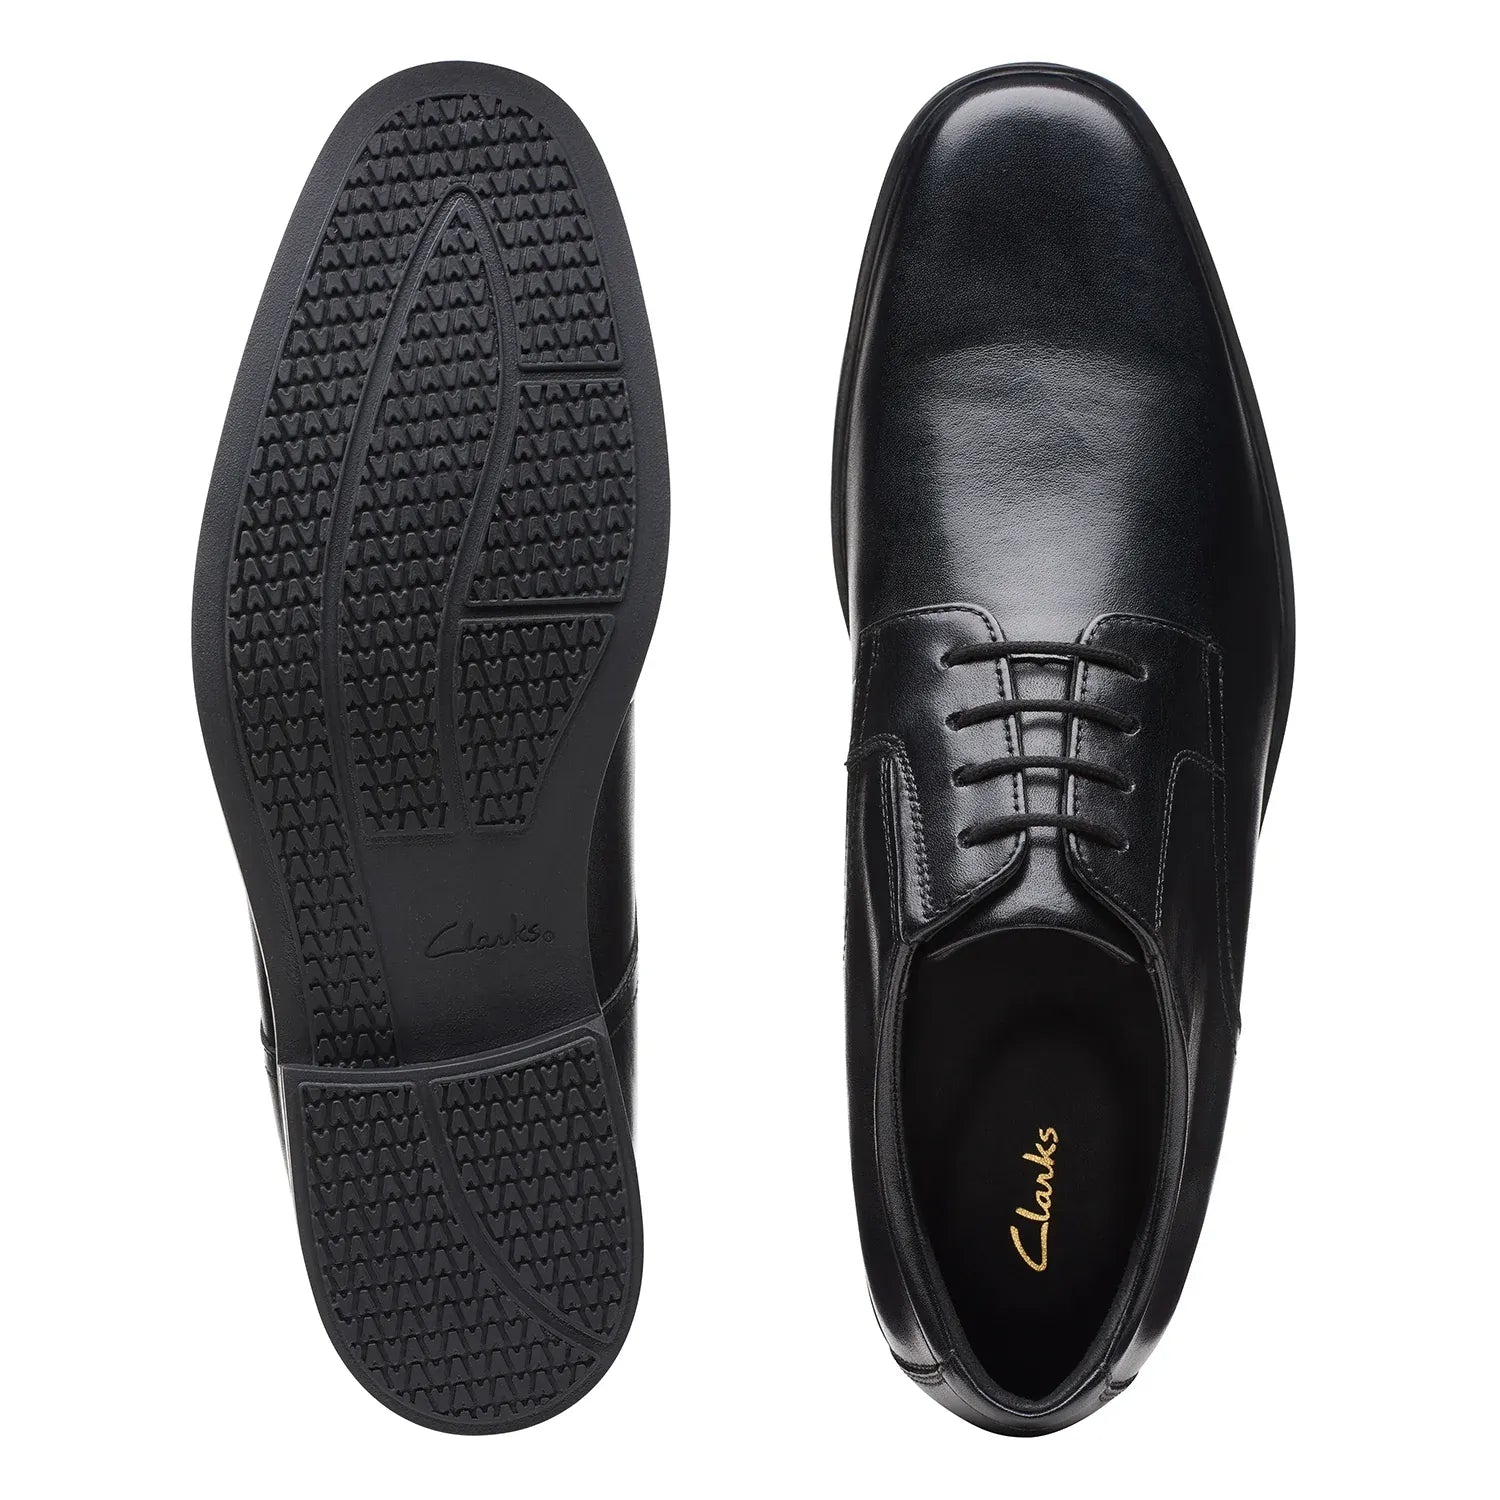 Clarks Men's Howard Walk Black Leather Shoes - Classic Black Leather